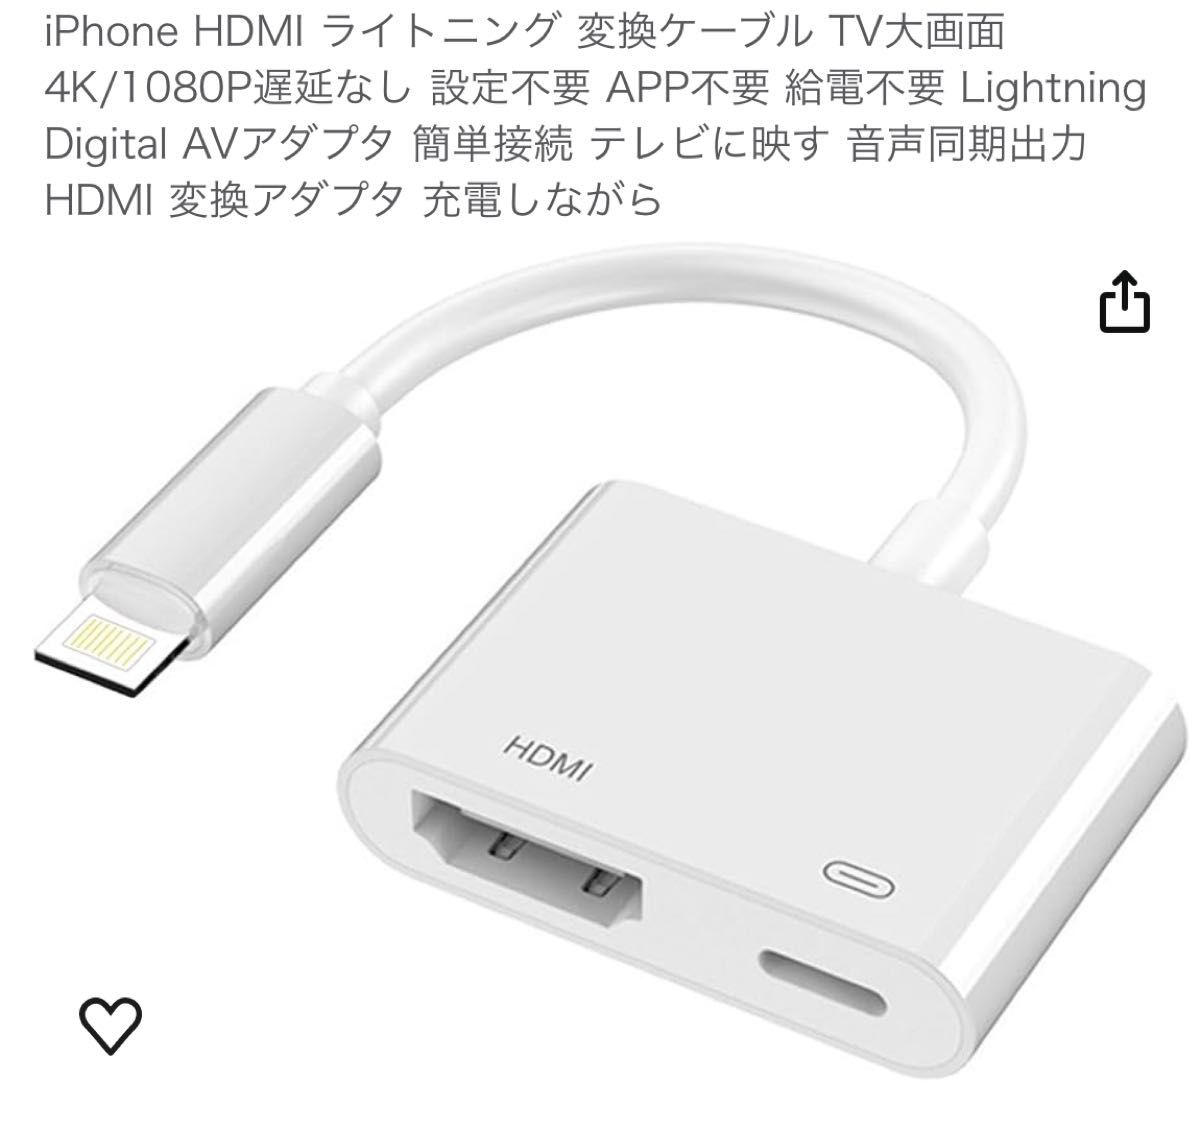 iPhone HDMI ライトニング 変換ケーブル TV大画面 4K/1080P遅延なし 設定不要 APP不要 給電不要  